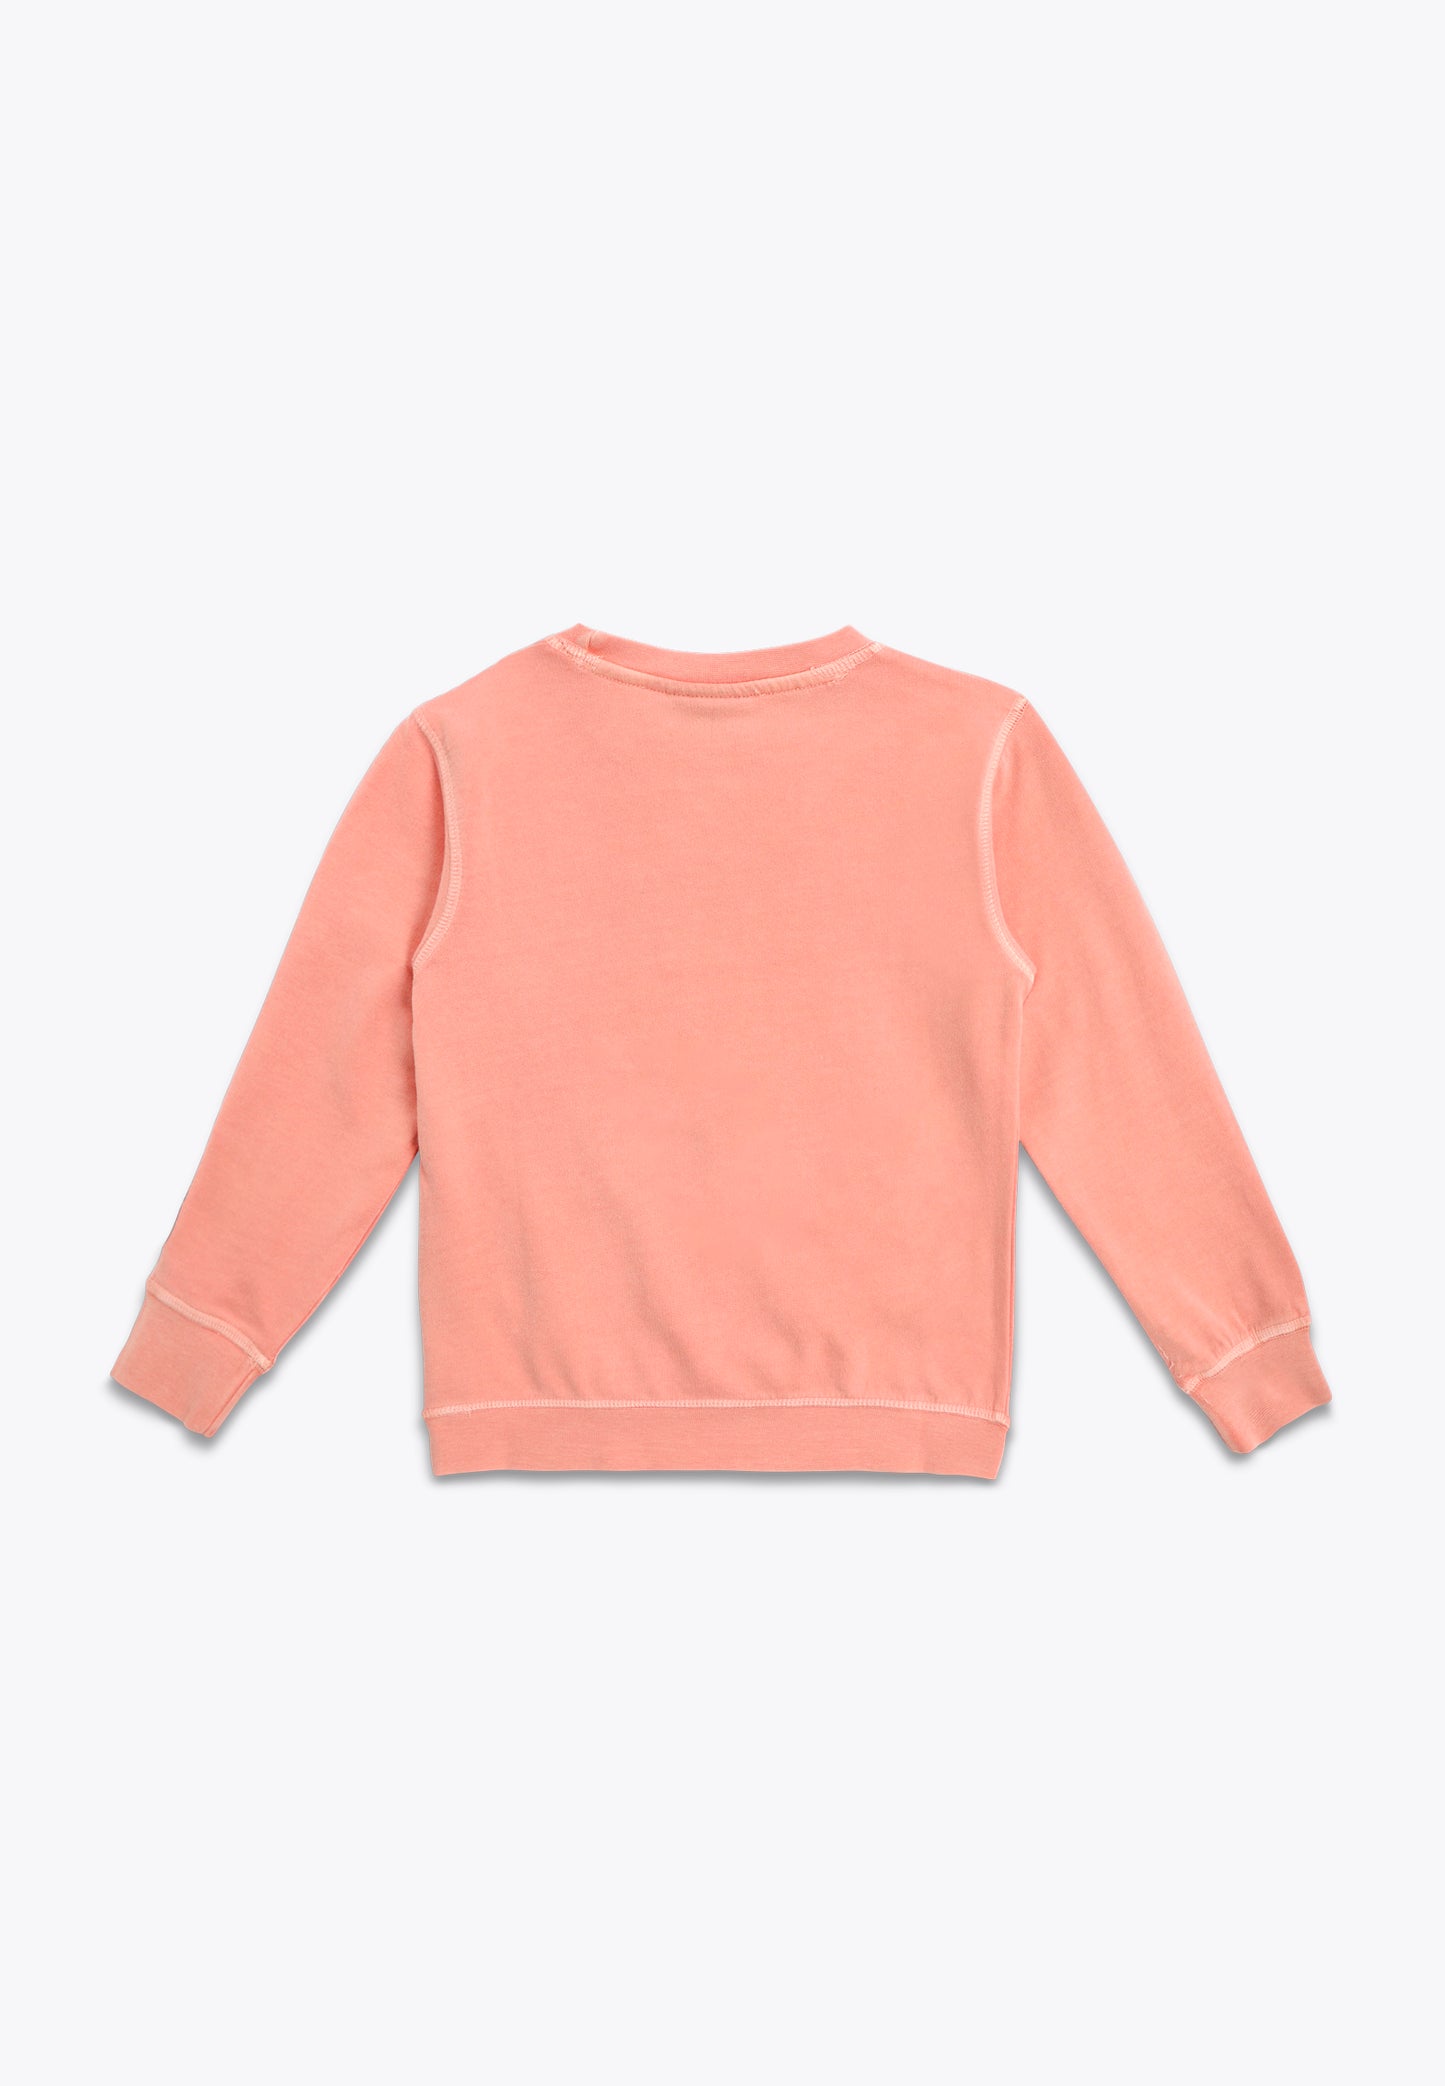 Garment Dyed Crewneck Sweatshirt